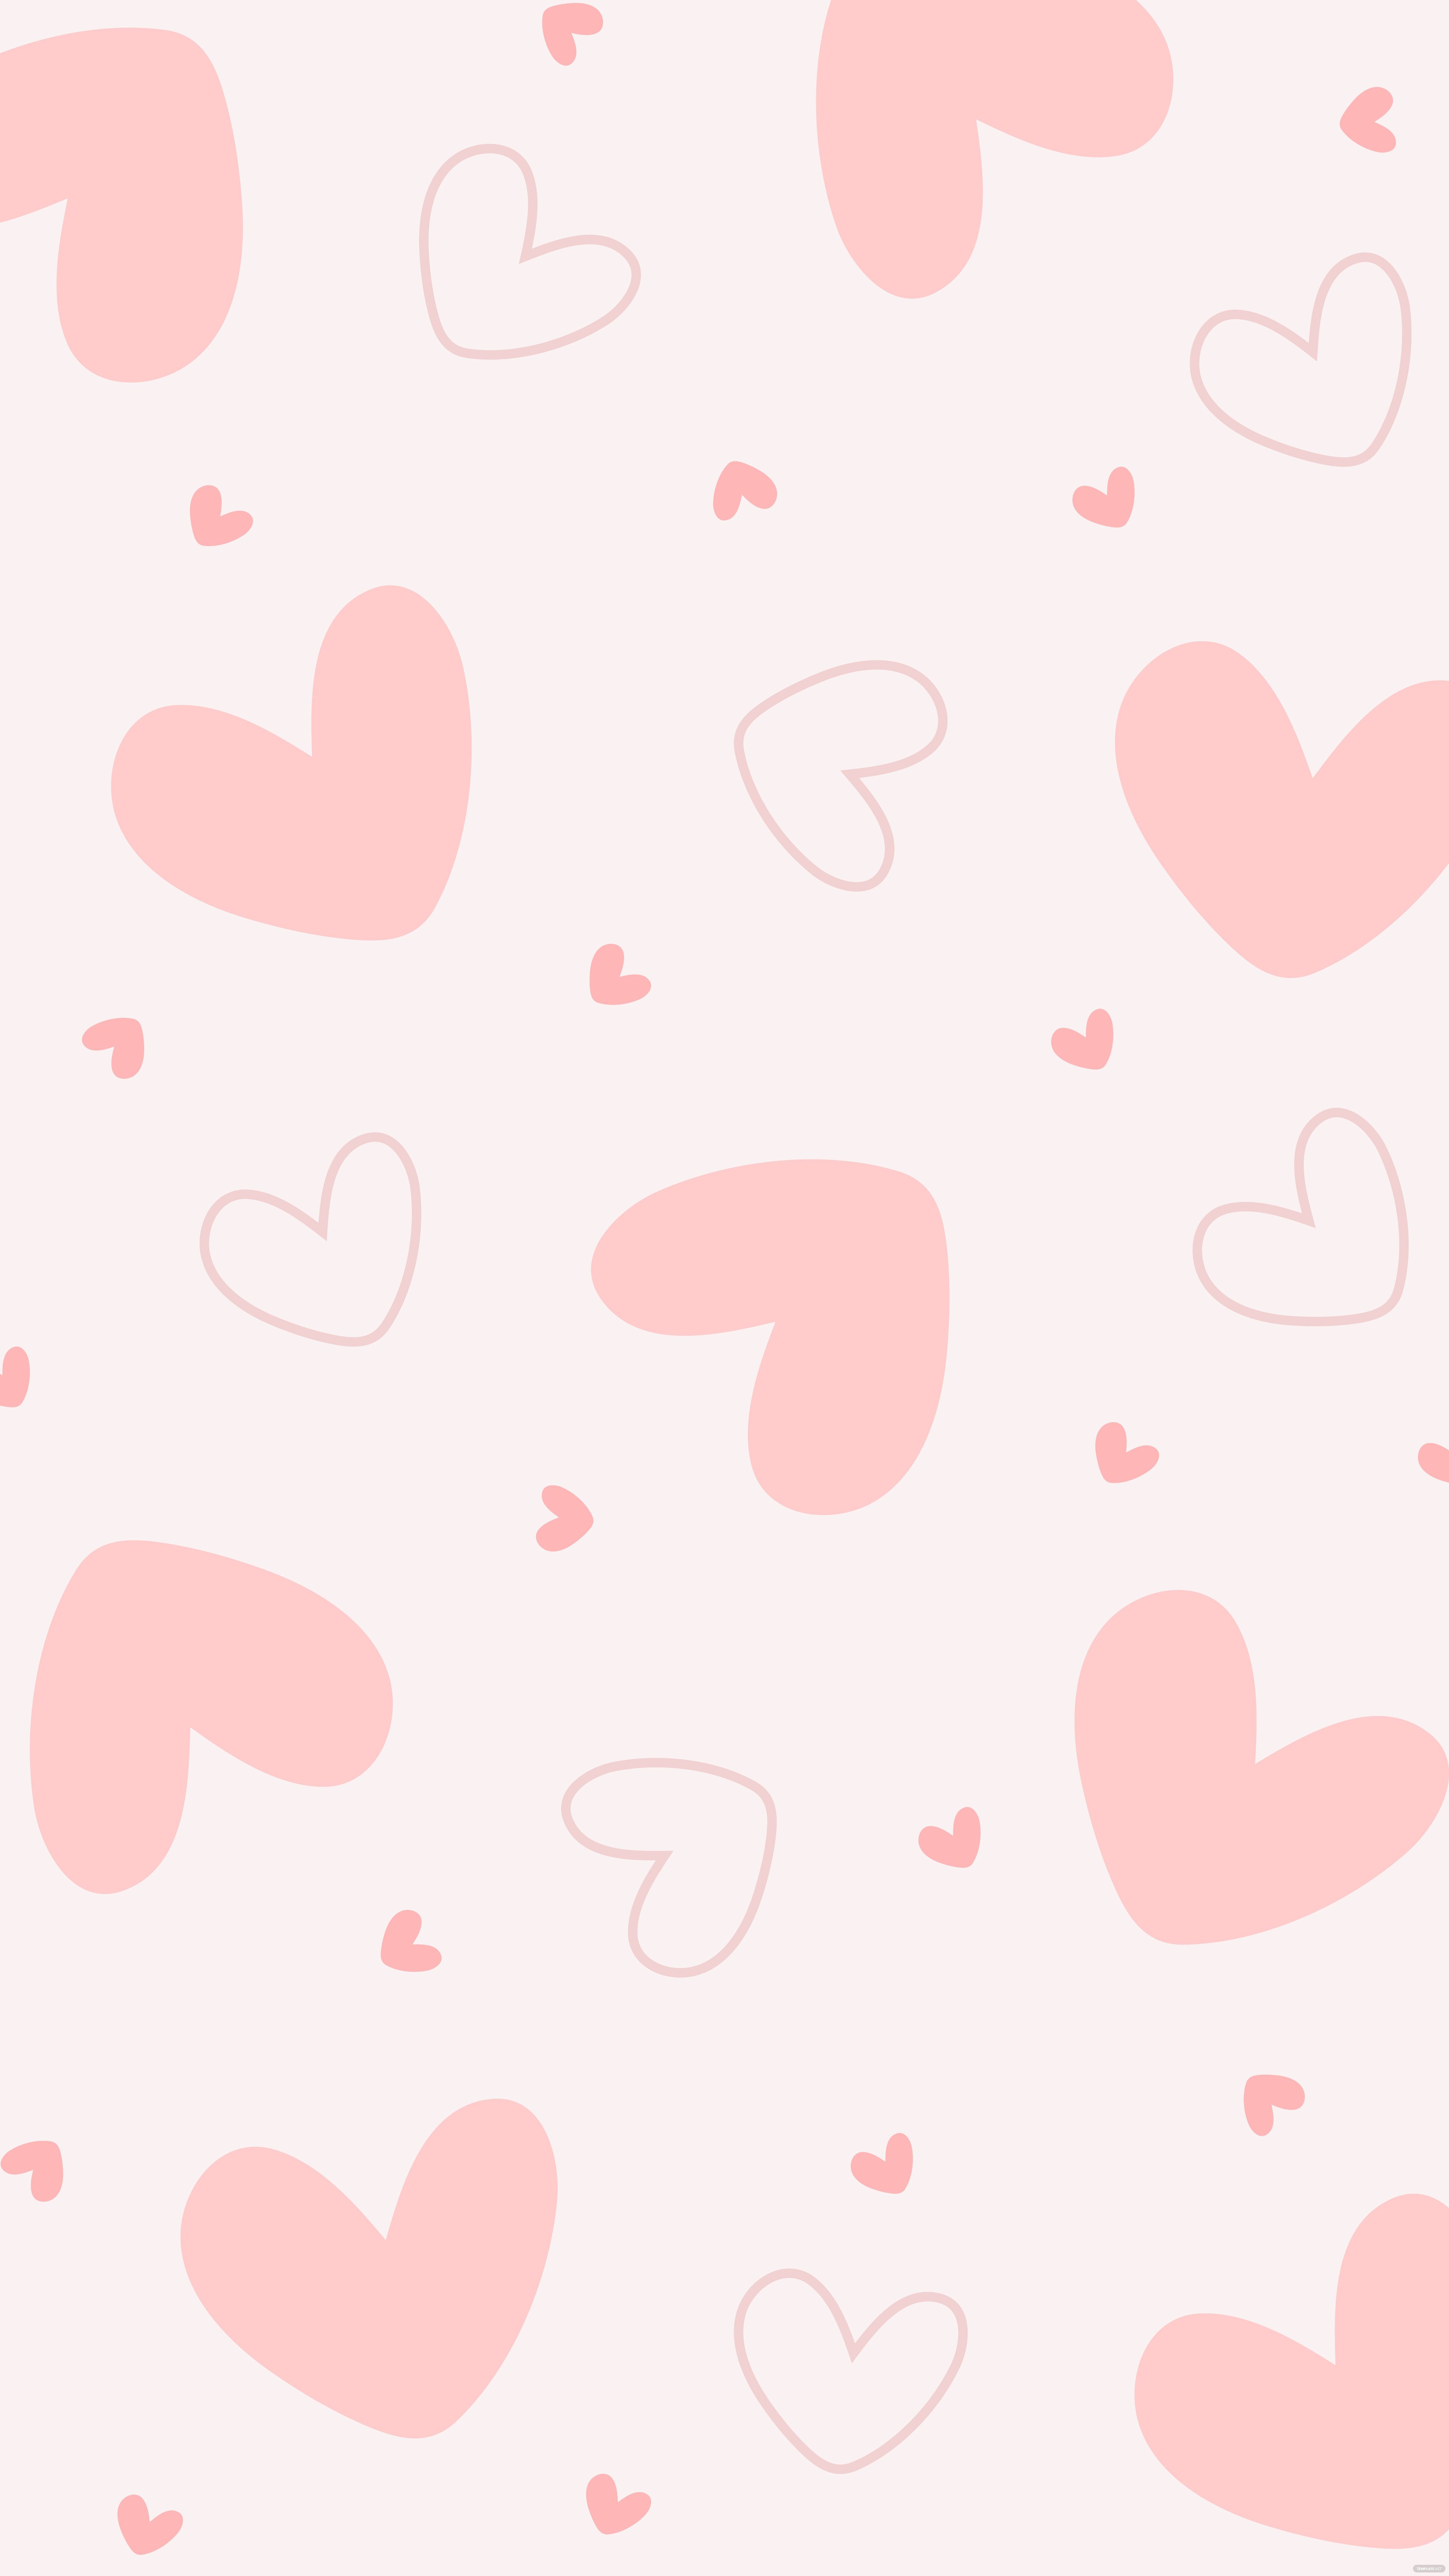 Free Free Pastel Pink Heart Background - EPS, Illustrator, JPG, SVG Template.net